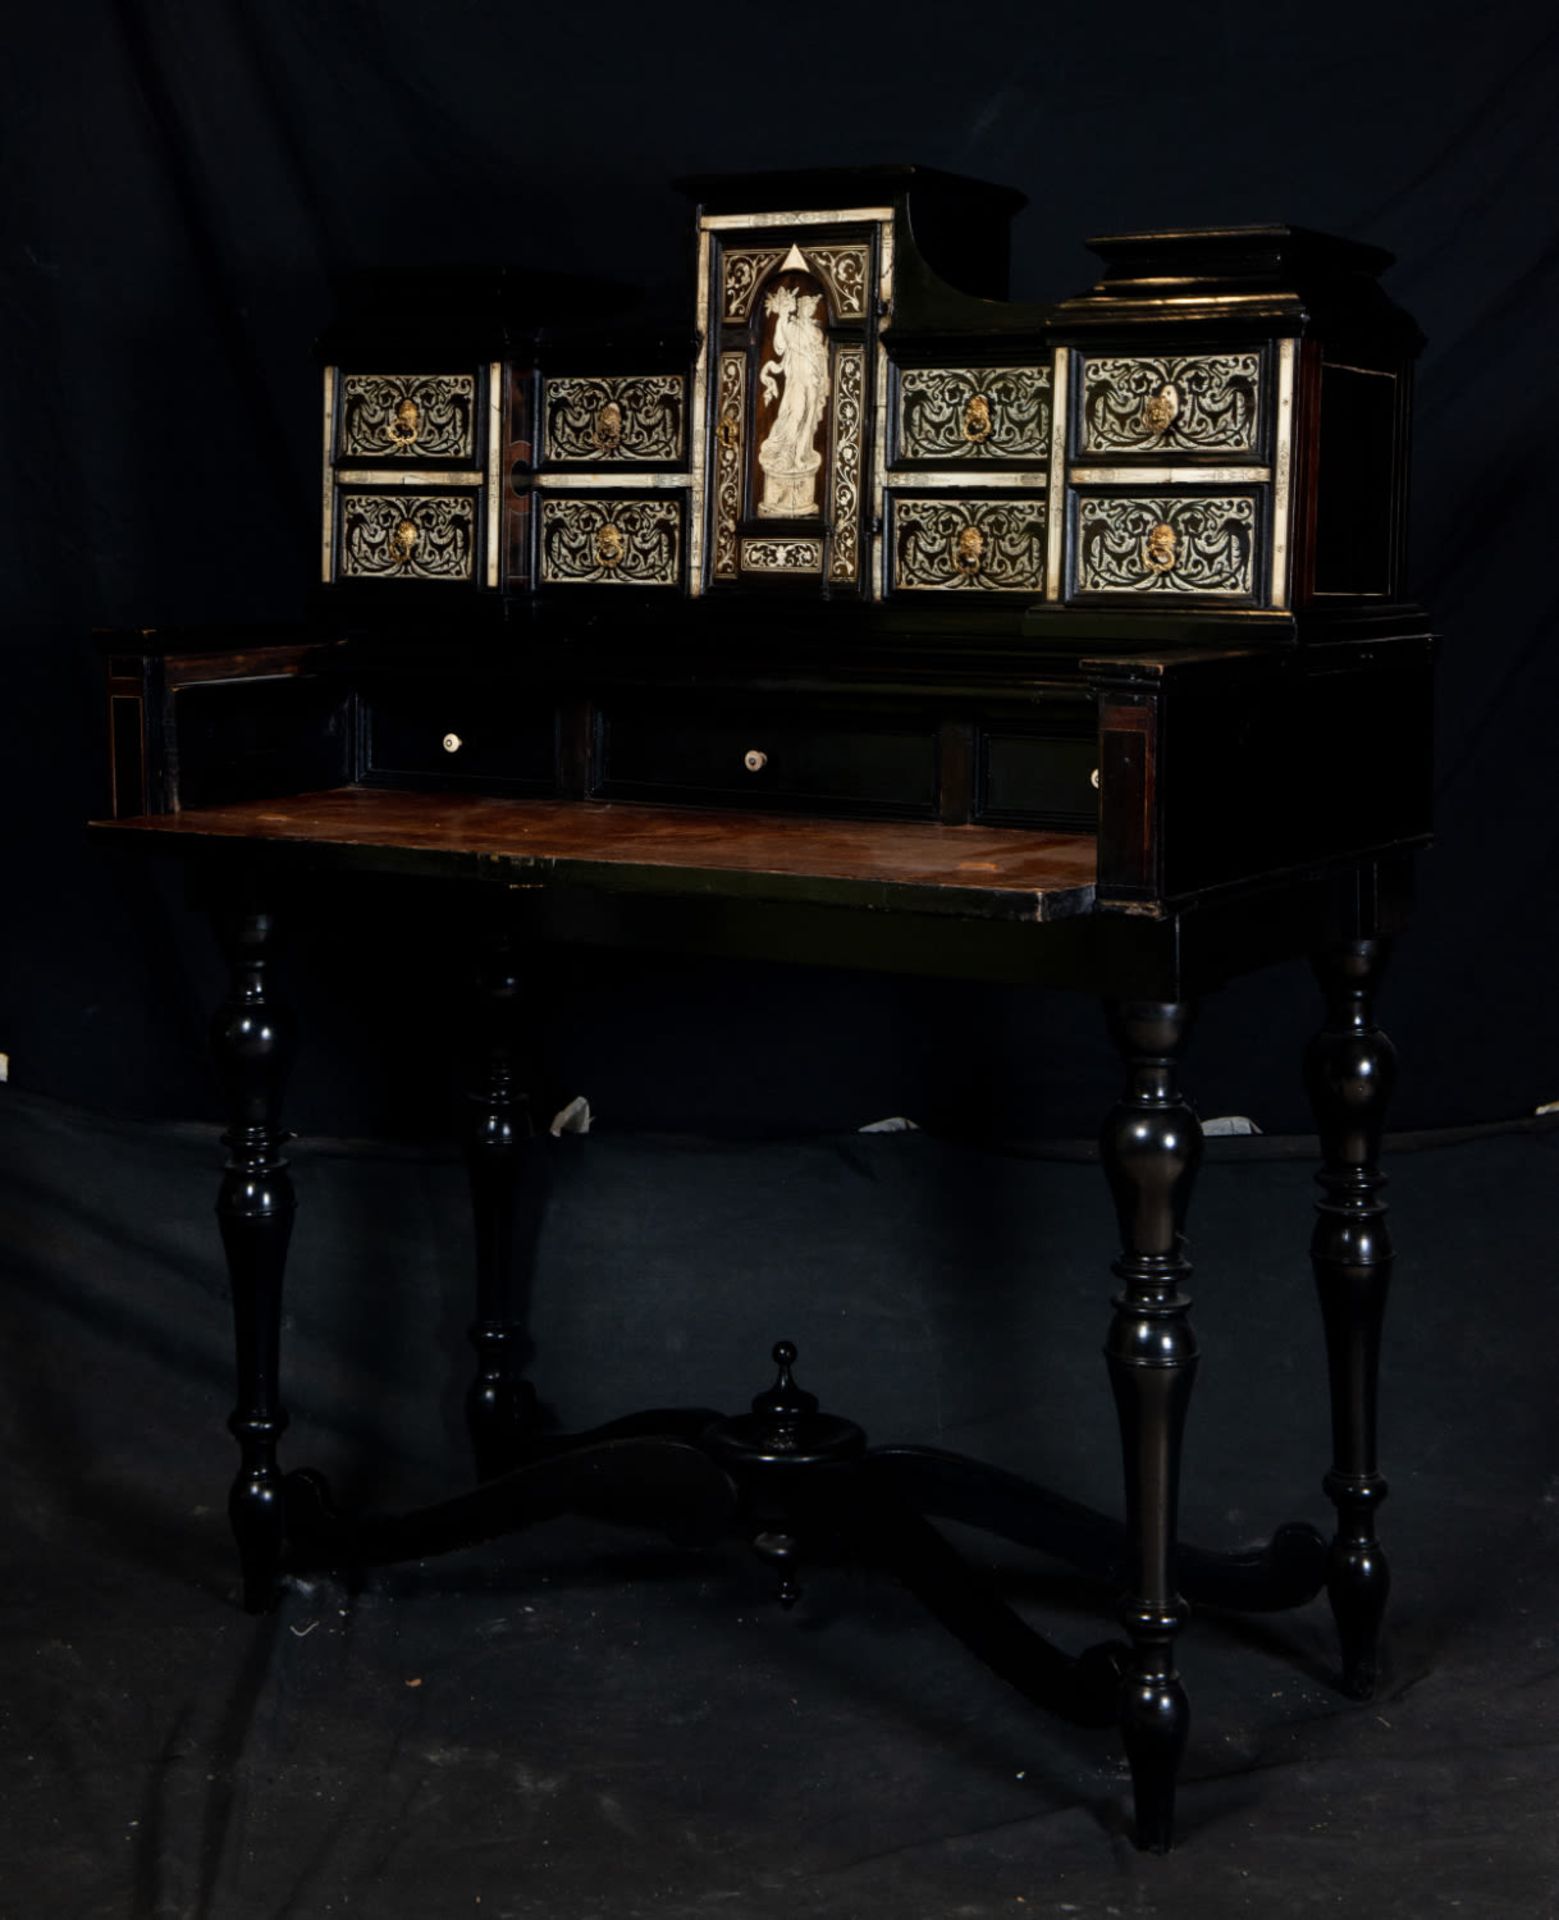 Important Florentine Desk in Ebonized Wood, Rosewood and bone inlays, 18th century Italian work - Image 9 of 10